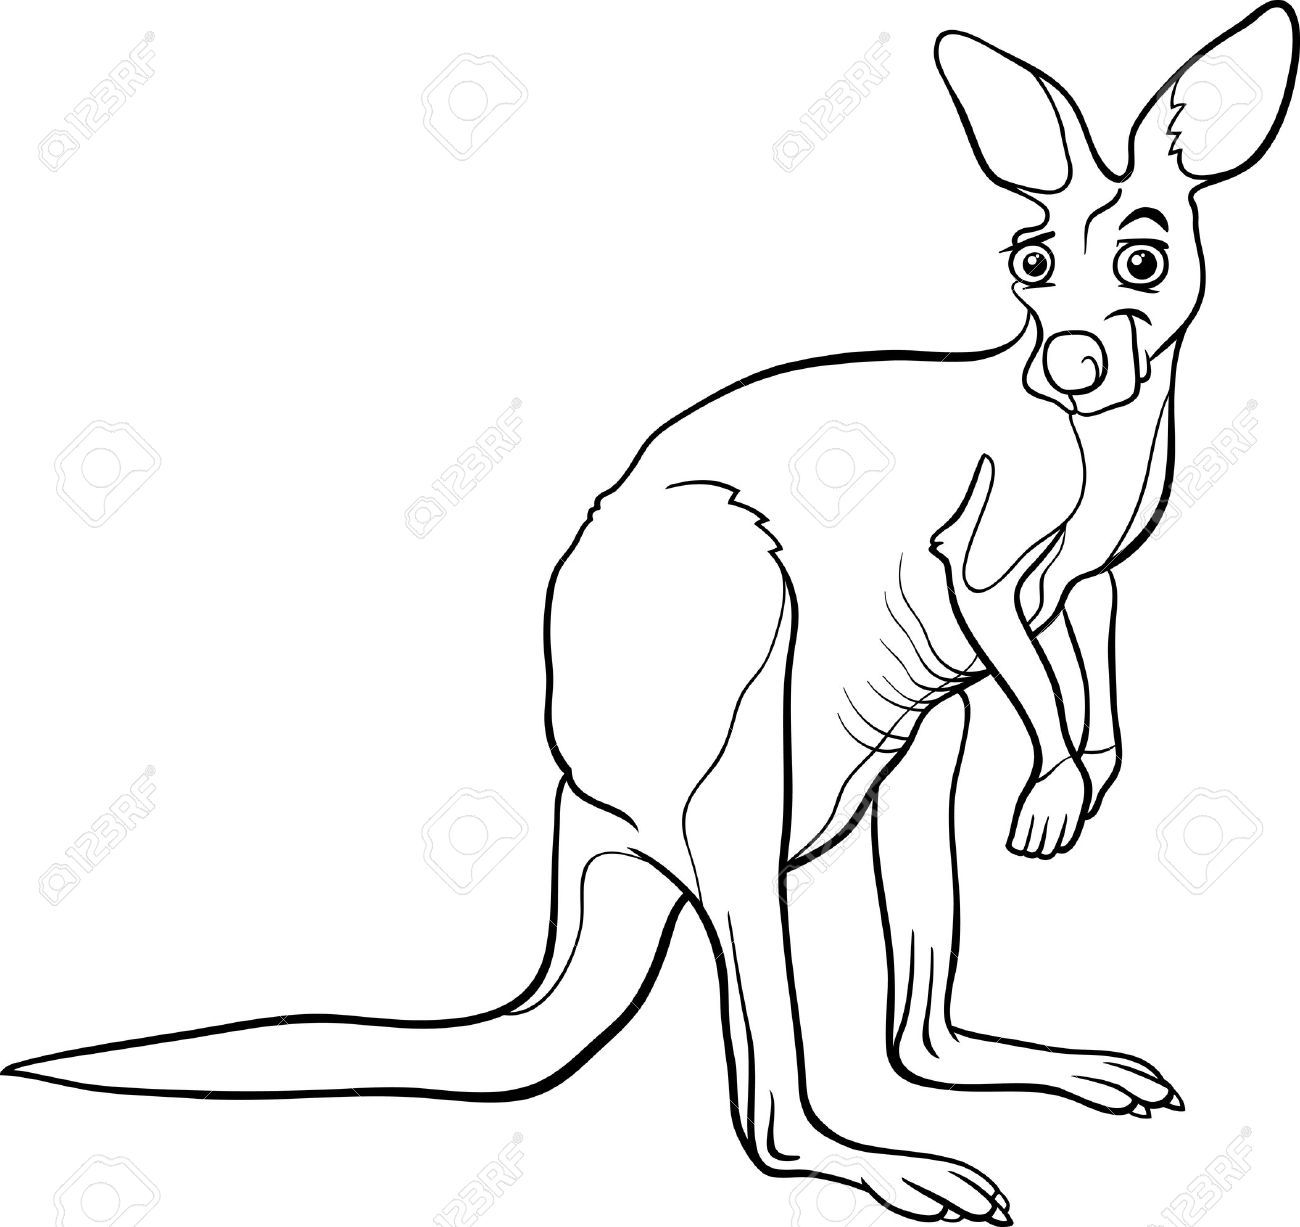 Kangaroo clipart black and white 1 » Clipart Portal.